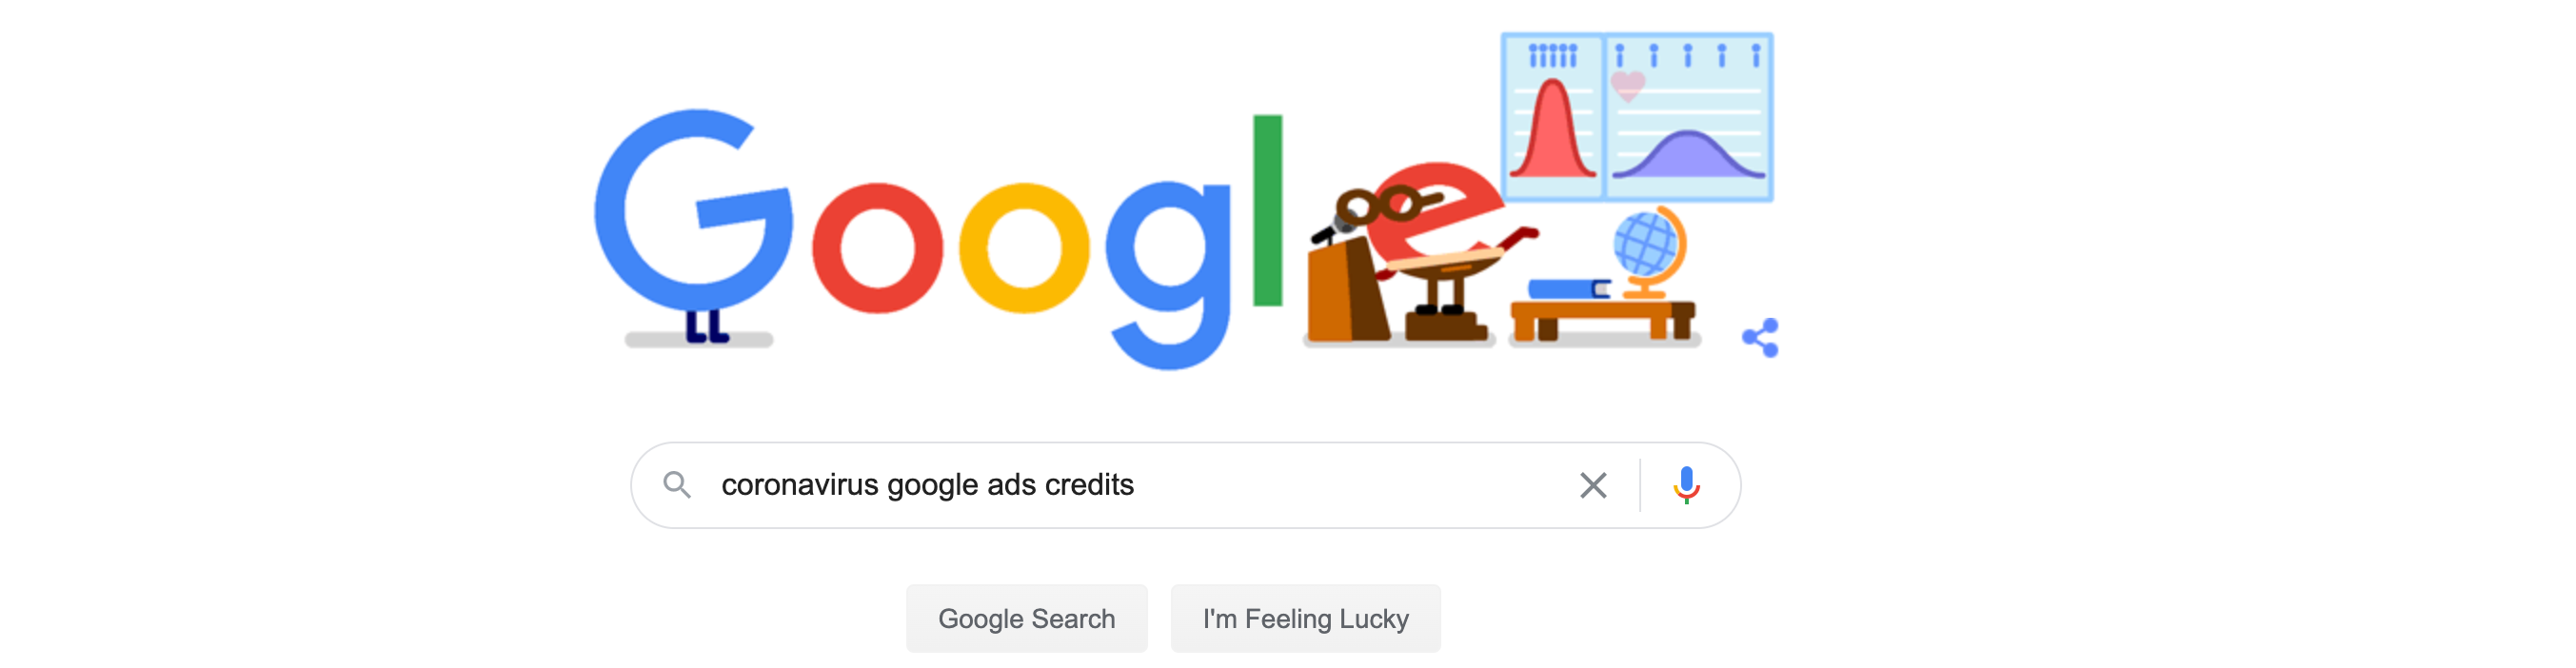 Search for Coronavirus Google Ads Credits
